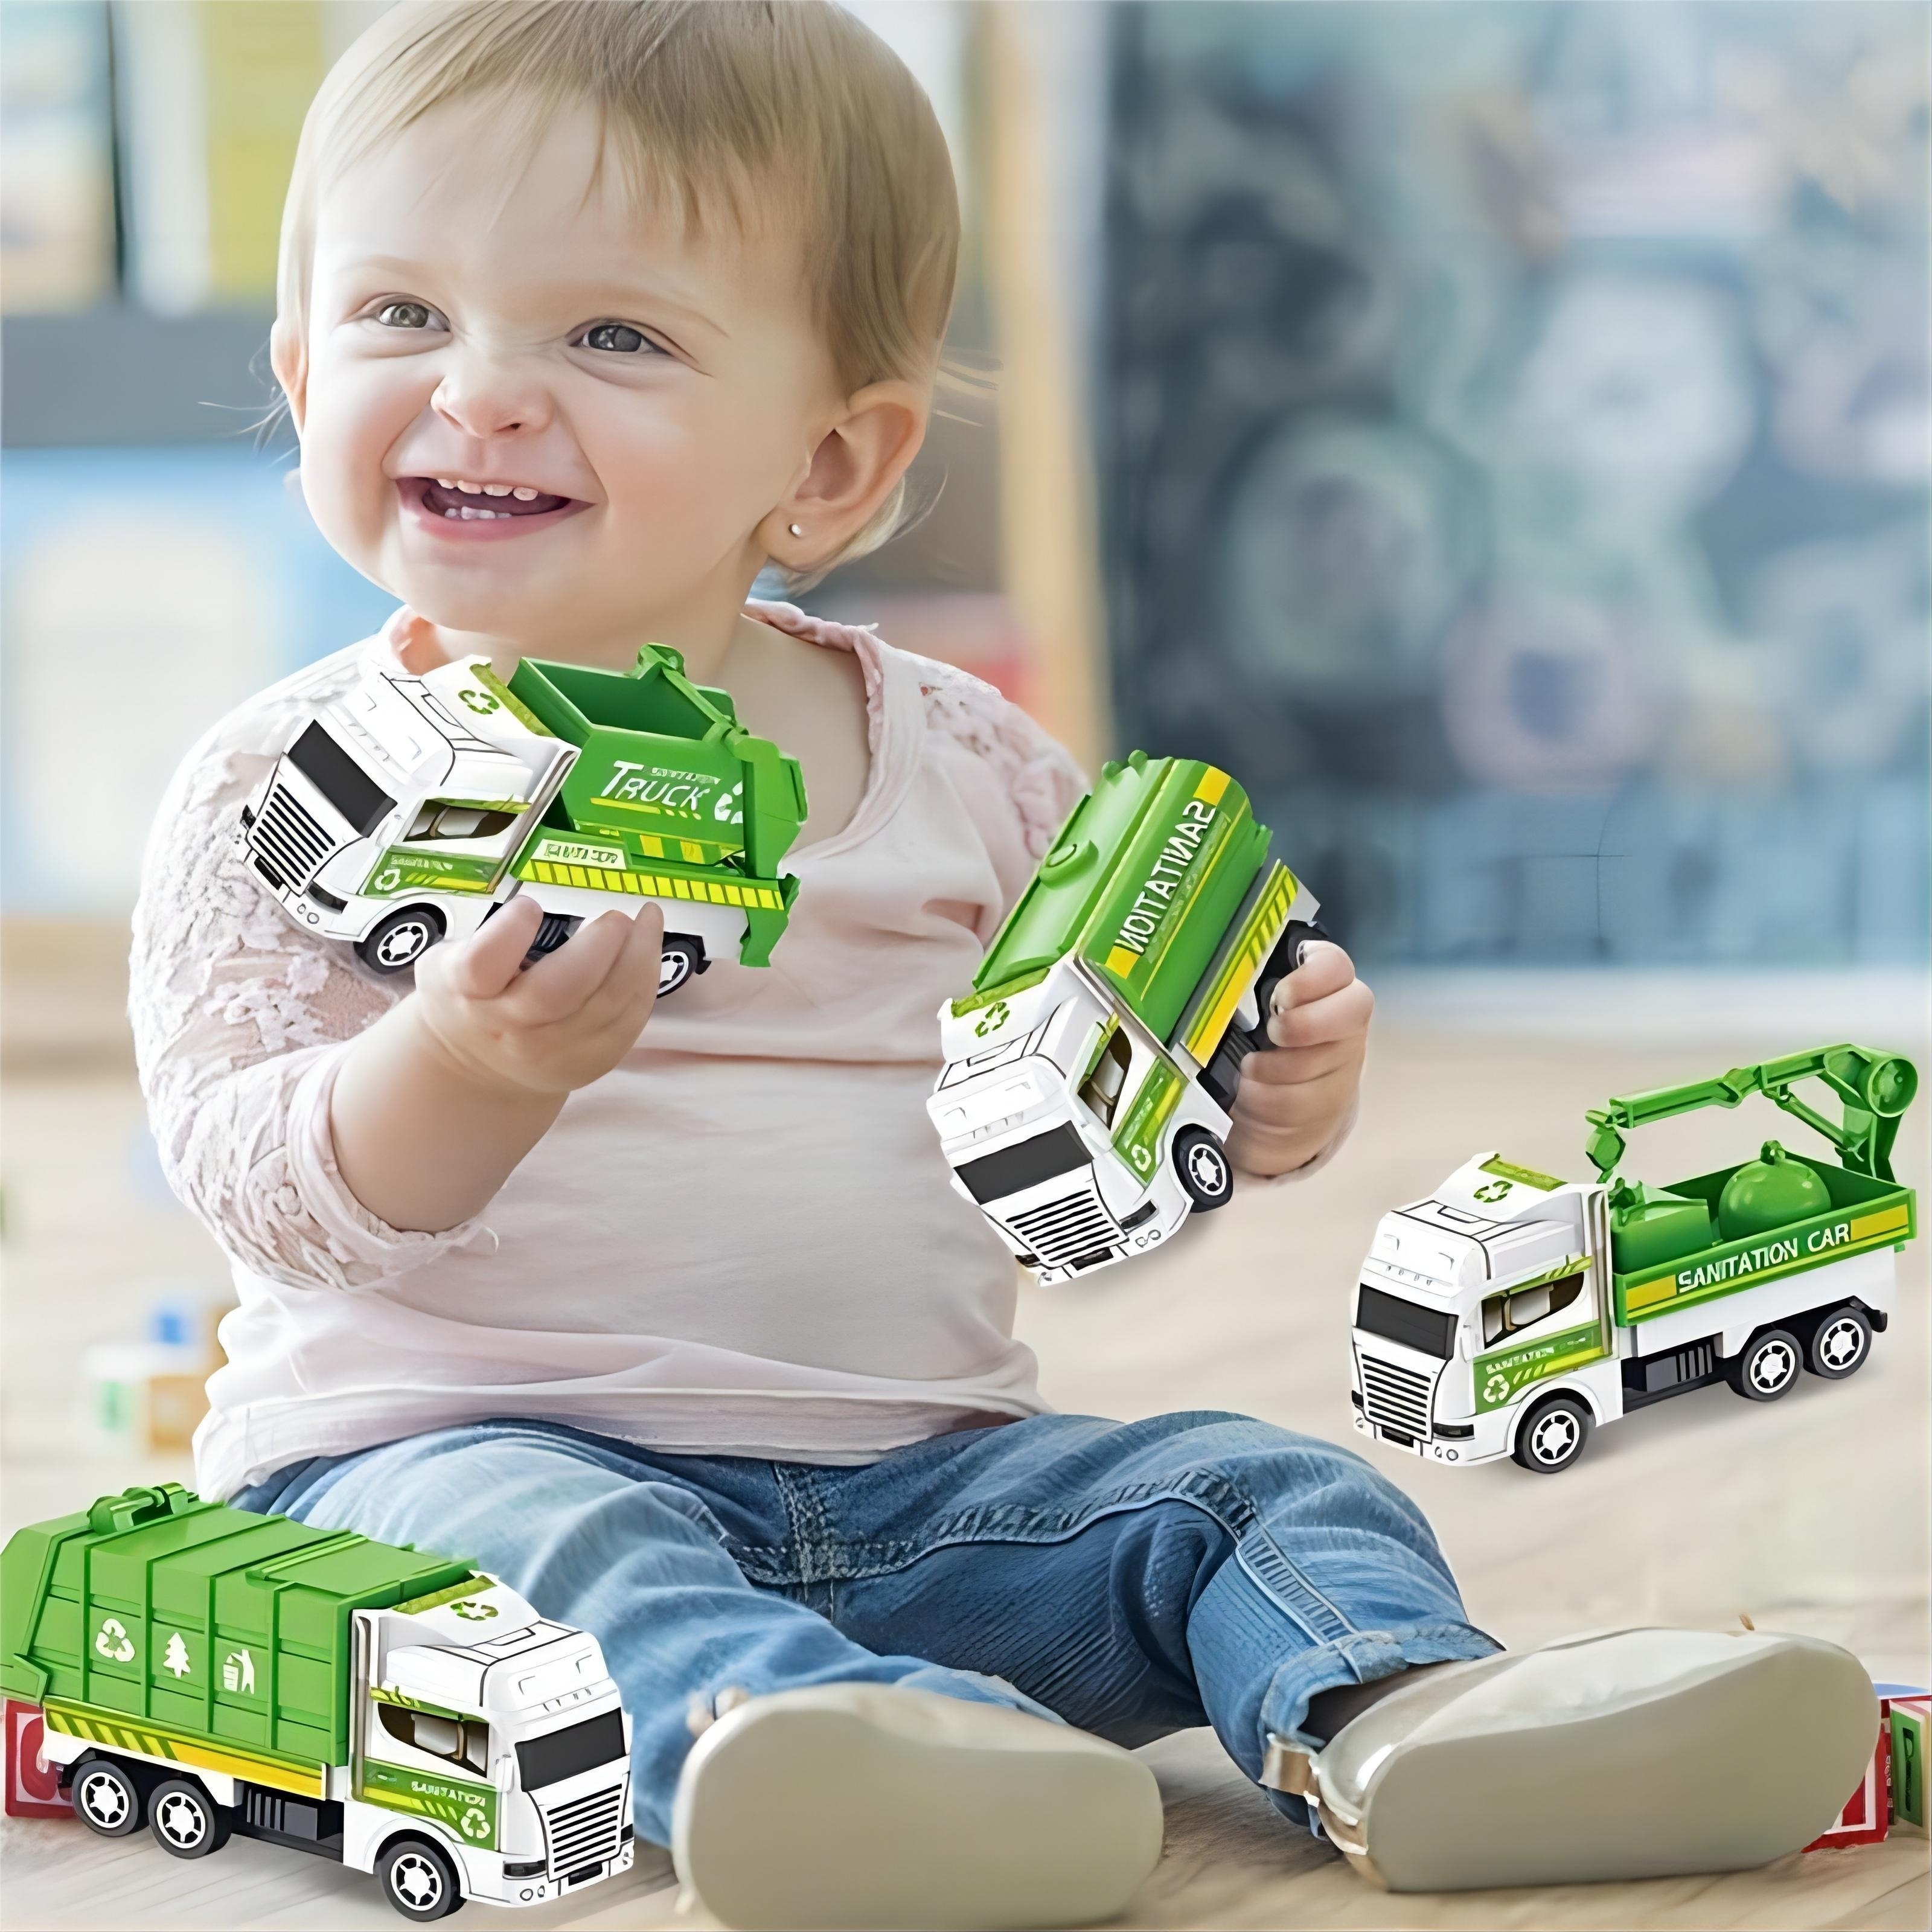 Children Press Inertia Toy Sliding Car Pull Back Engineering